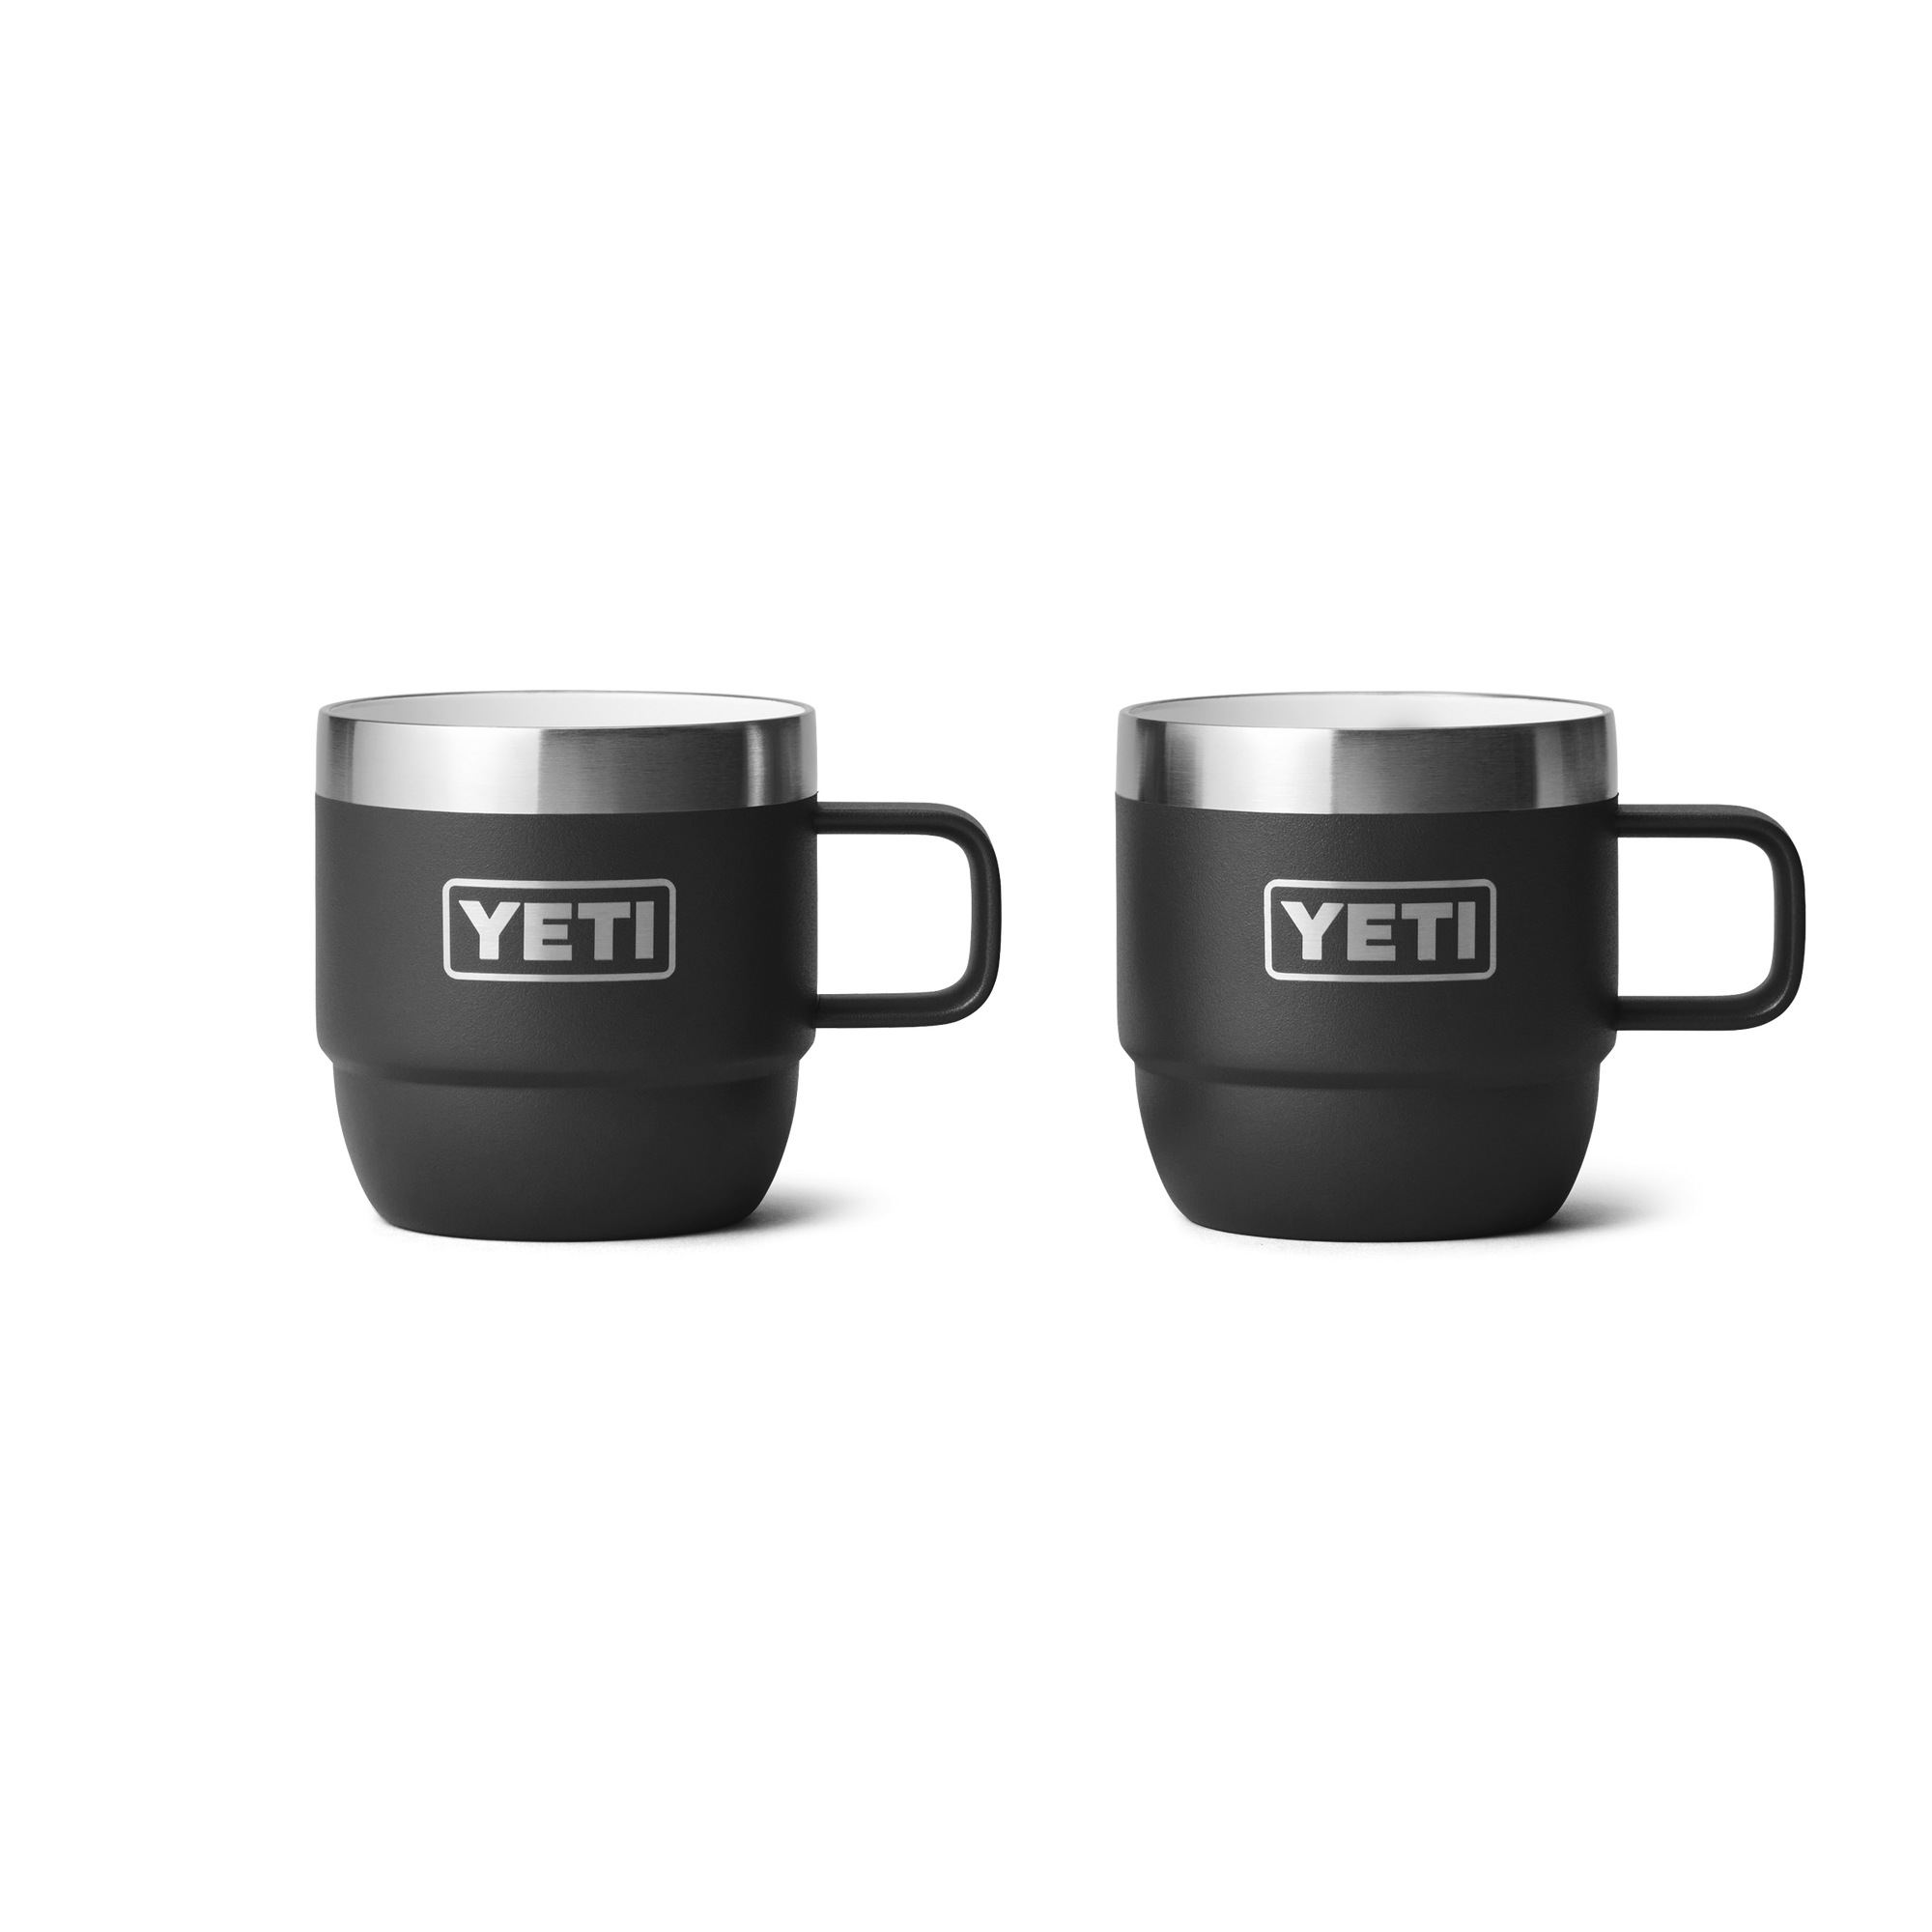 Yeti Espresso Mug 2 Pack - Black